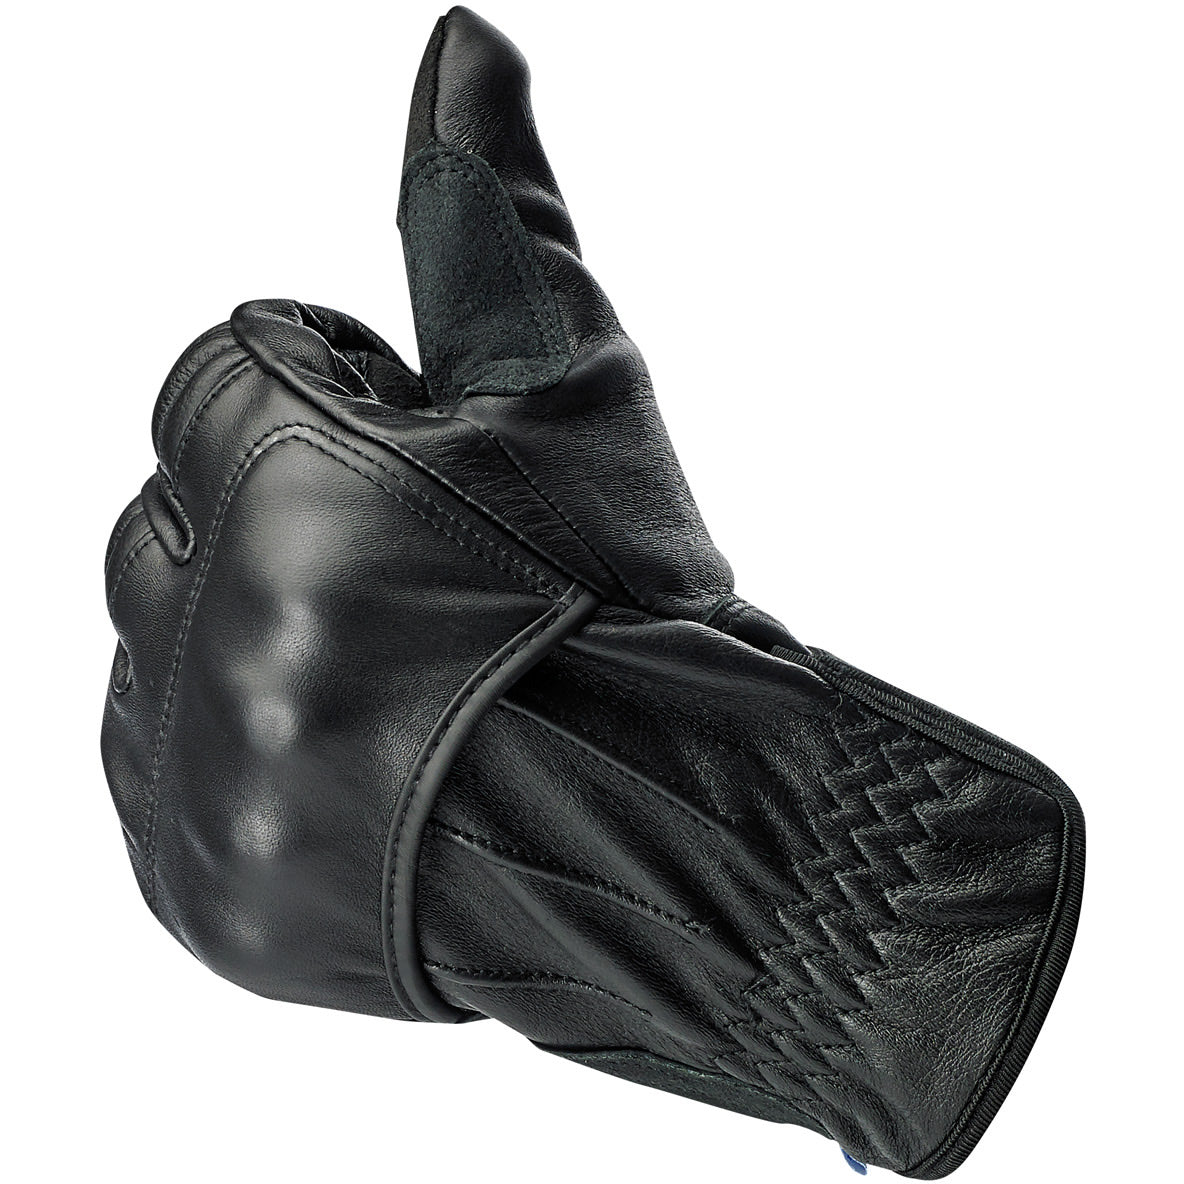 Belden Gloves - Black/Black